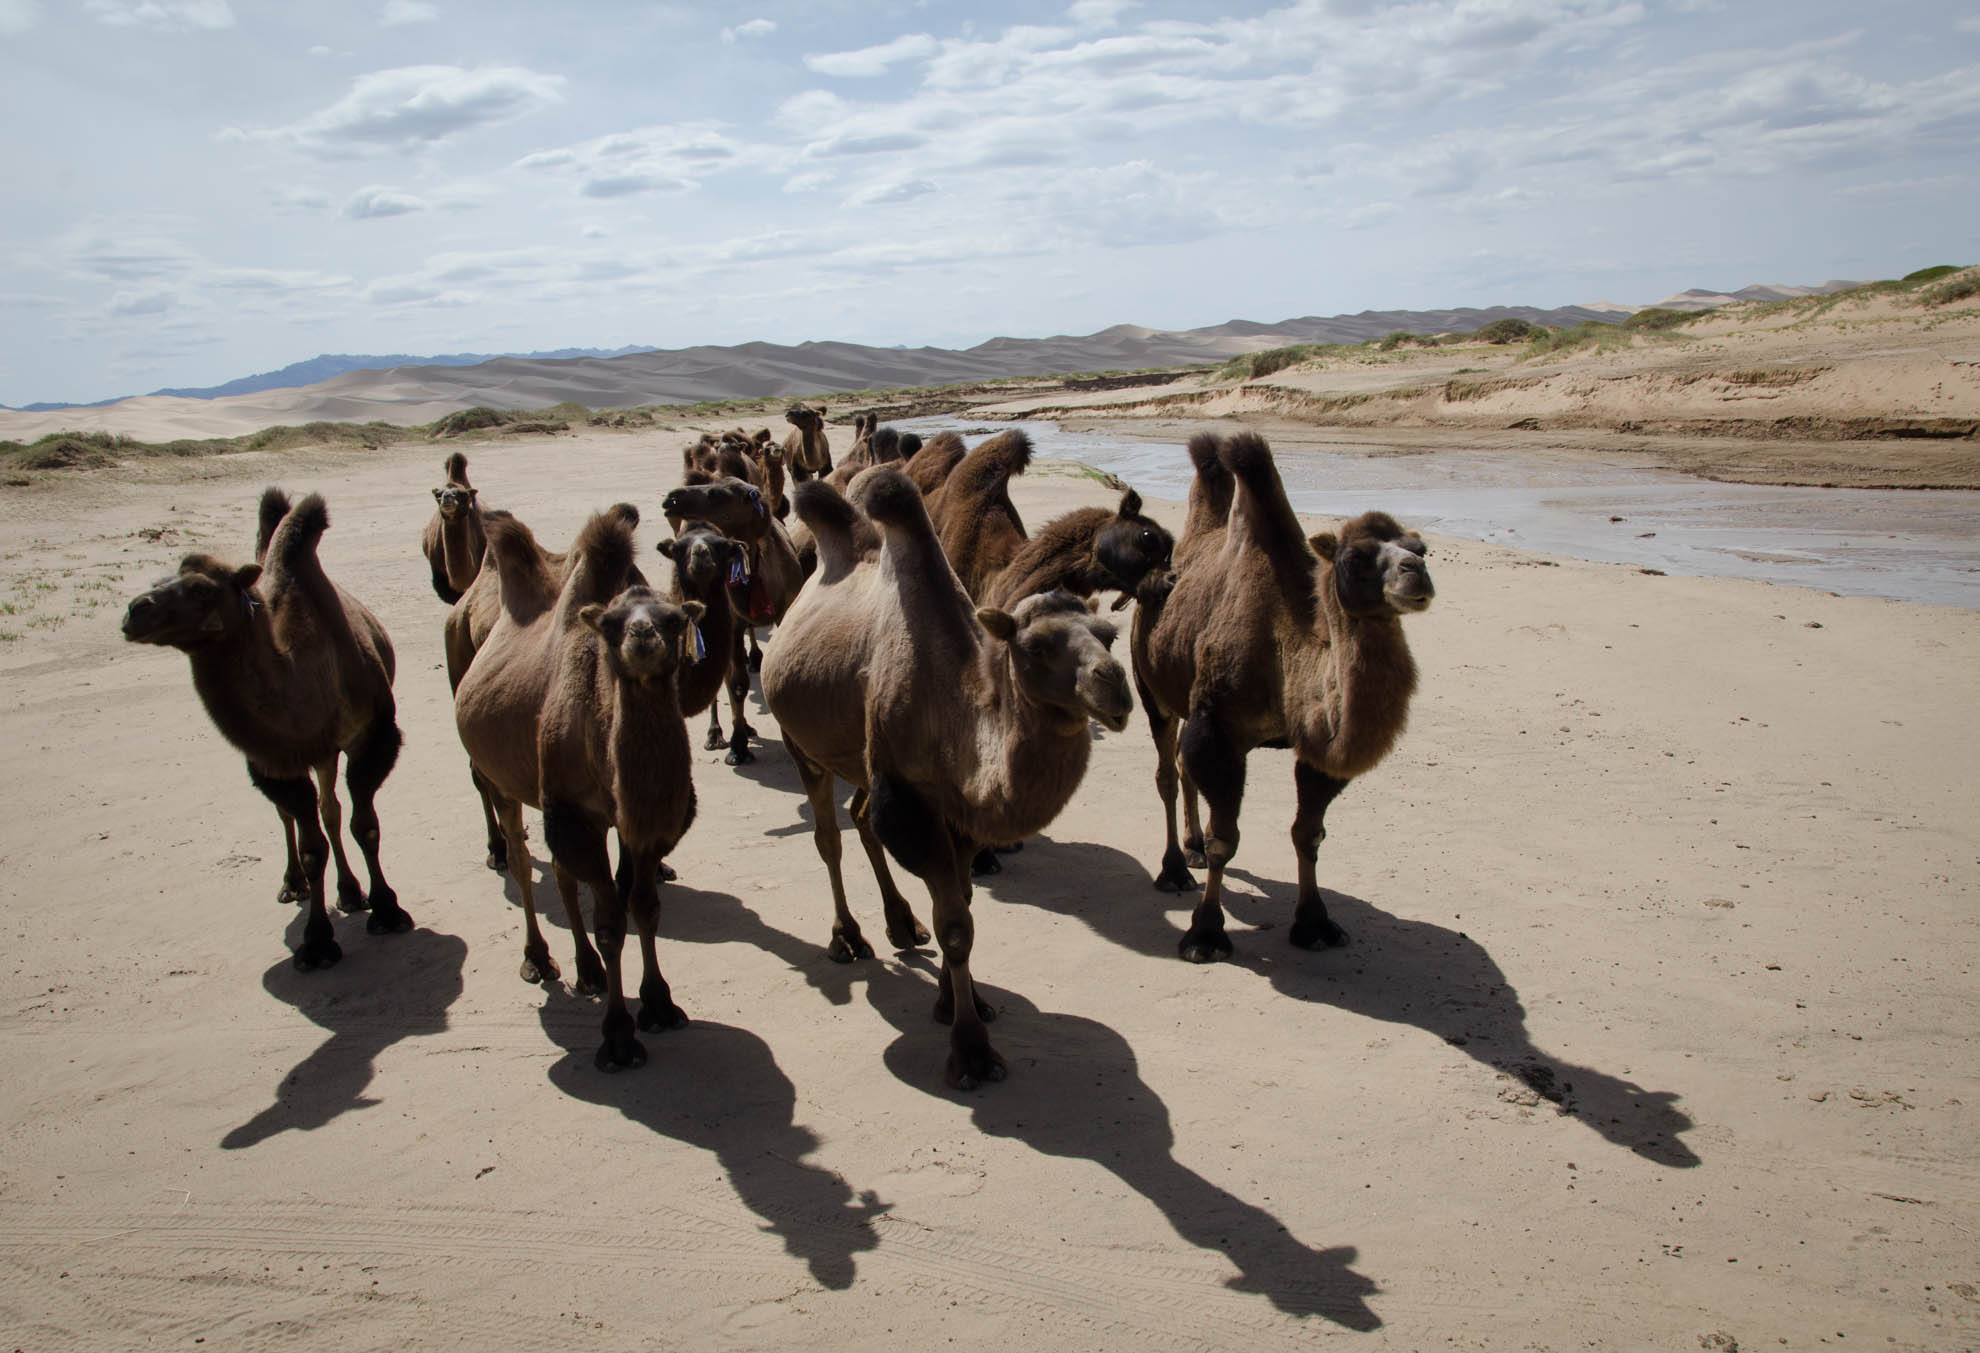 Curious camels